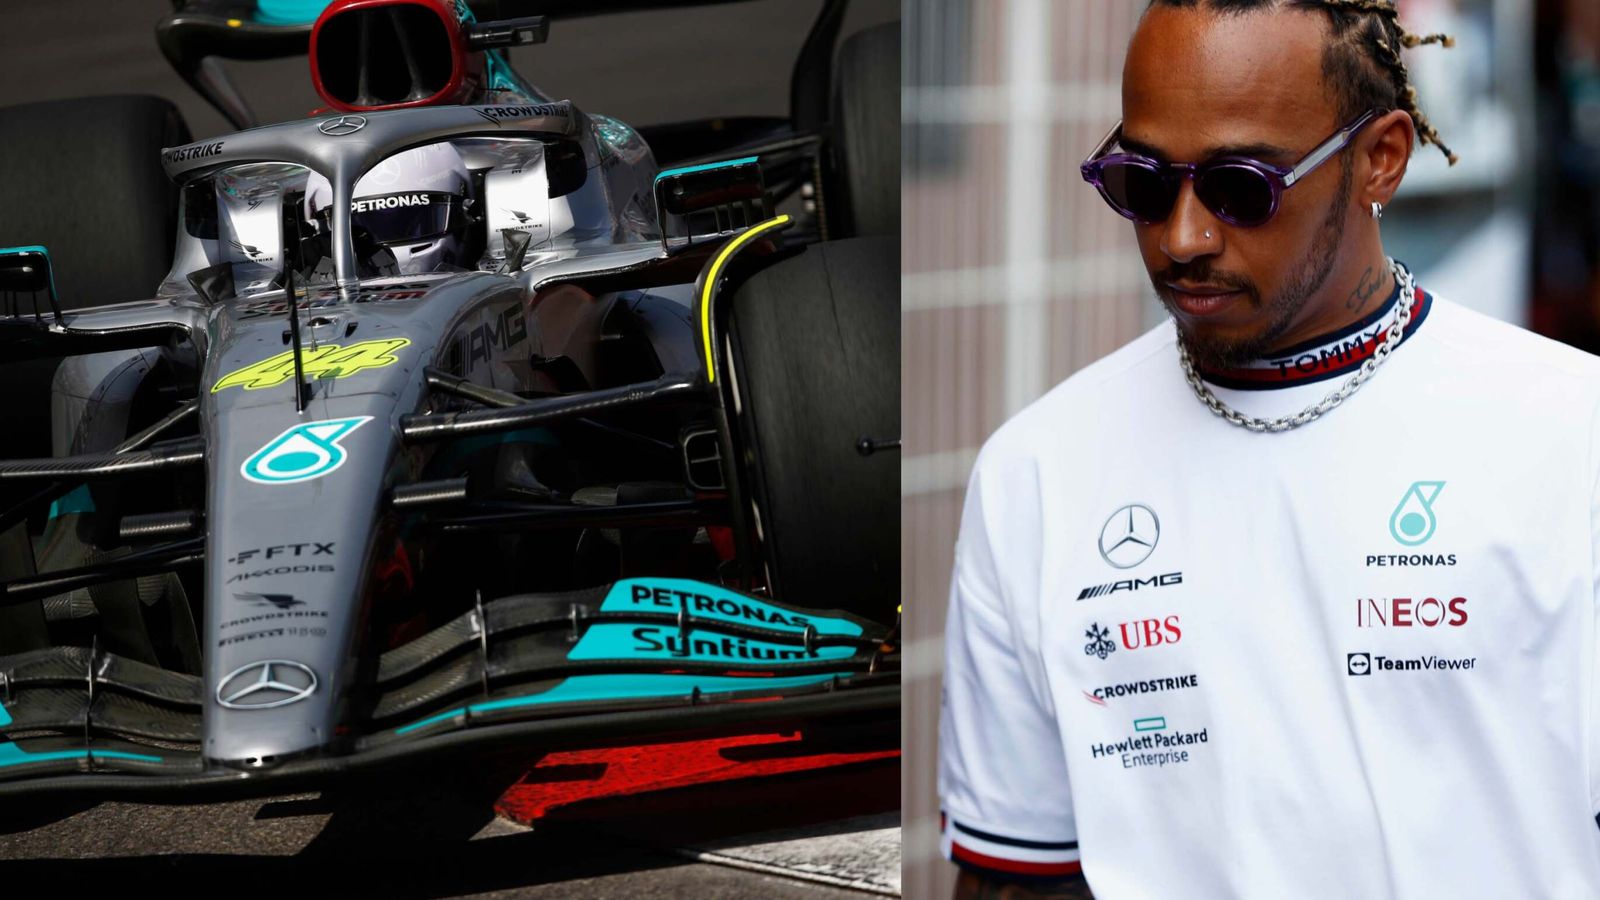 Monaco GP: Lewis Hamilton bemoans ‘bumpiest rollercoaster’ in Mercedes as Charles Leclerc takes control